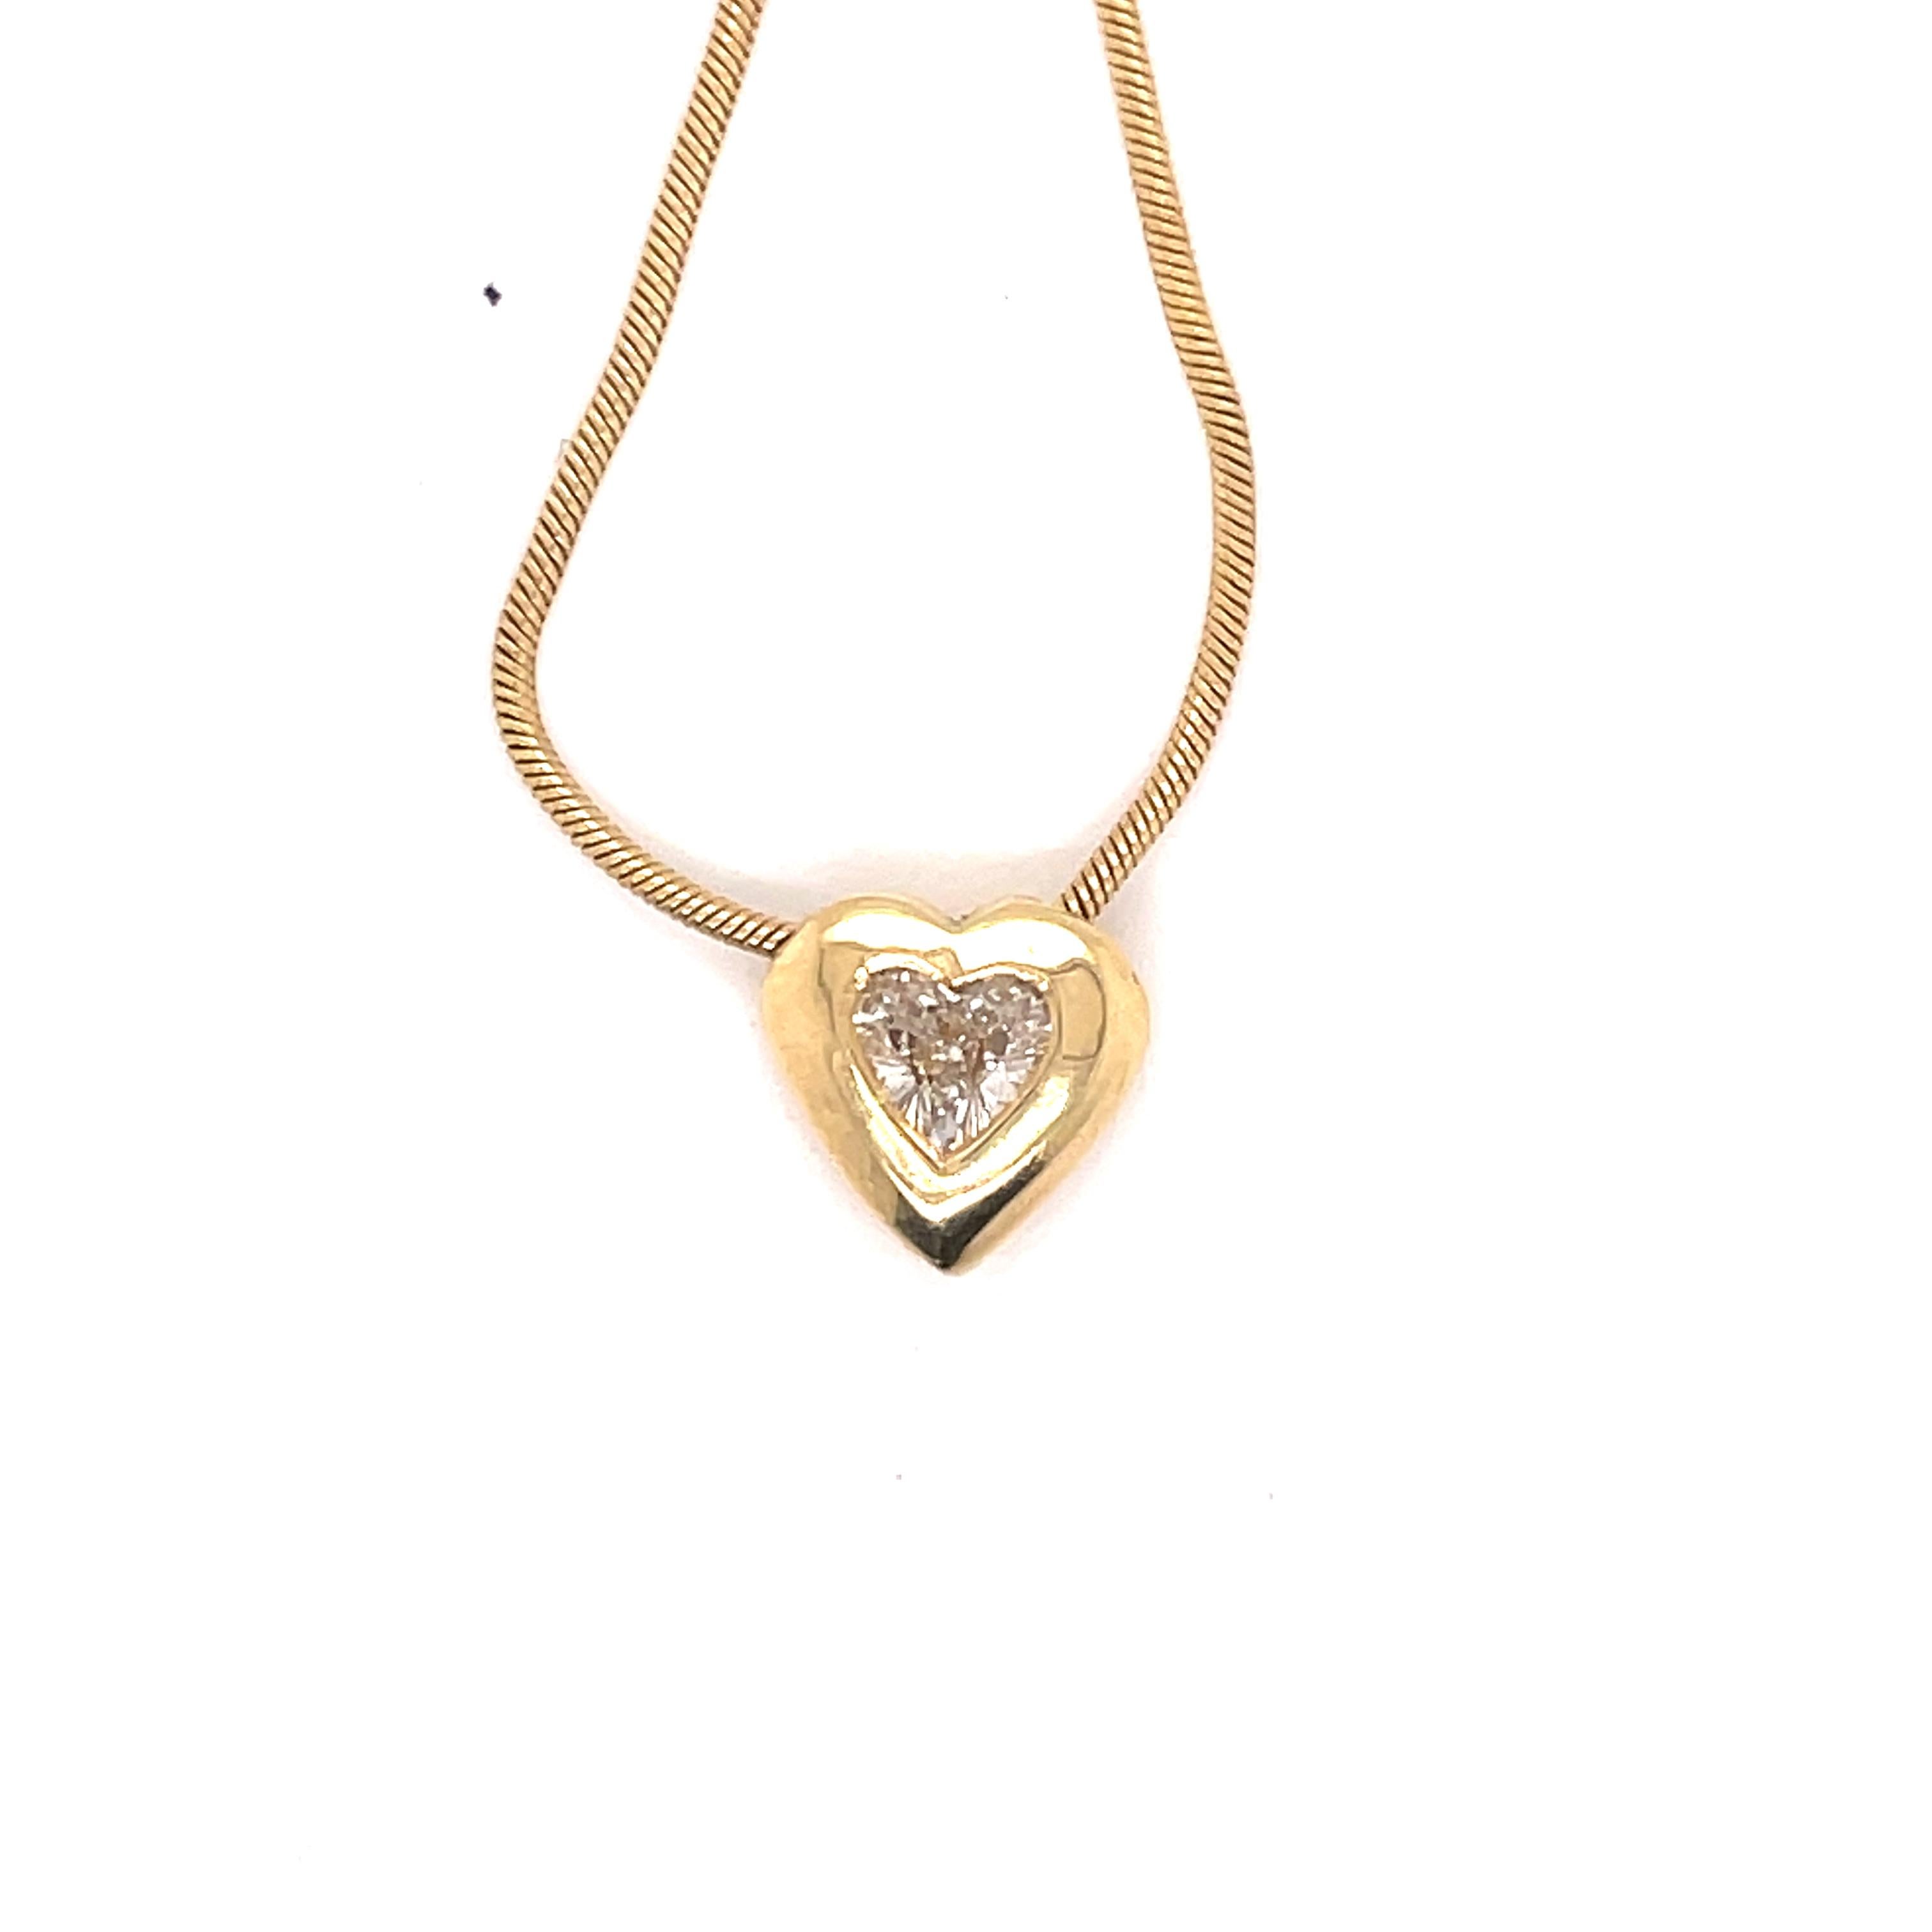 A bezel set 14K Yellow Gold Diamond Heart Pendant. Diamond weight ~ .30 carat